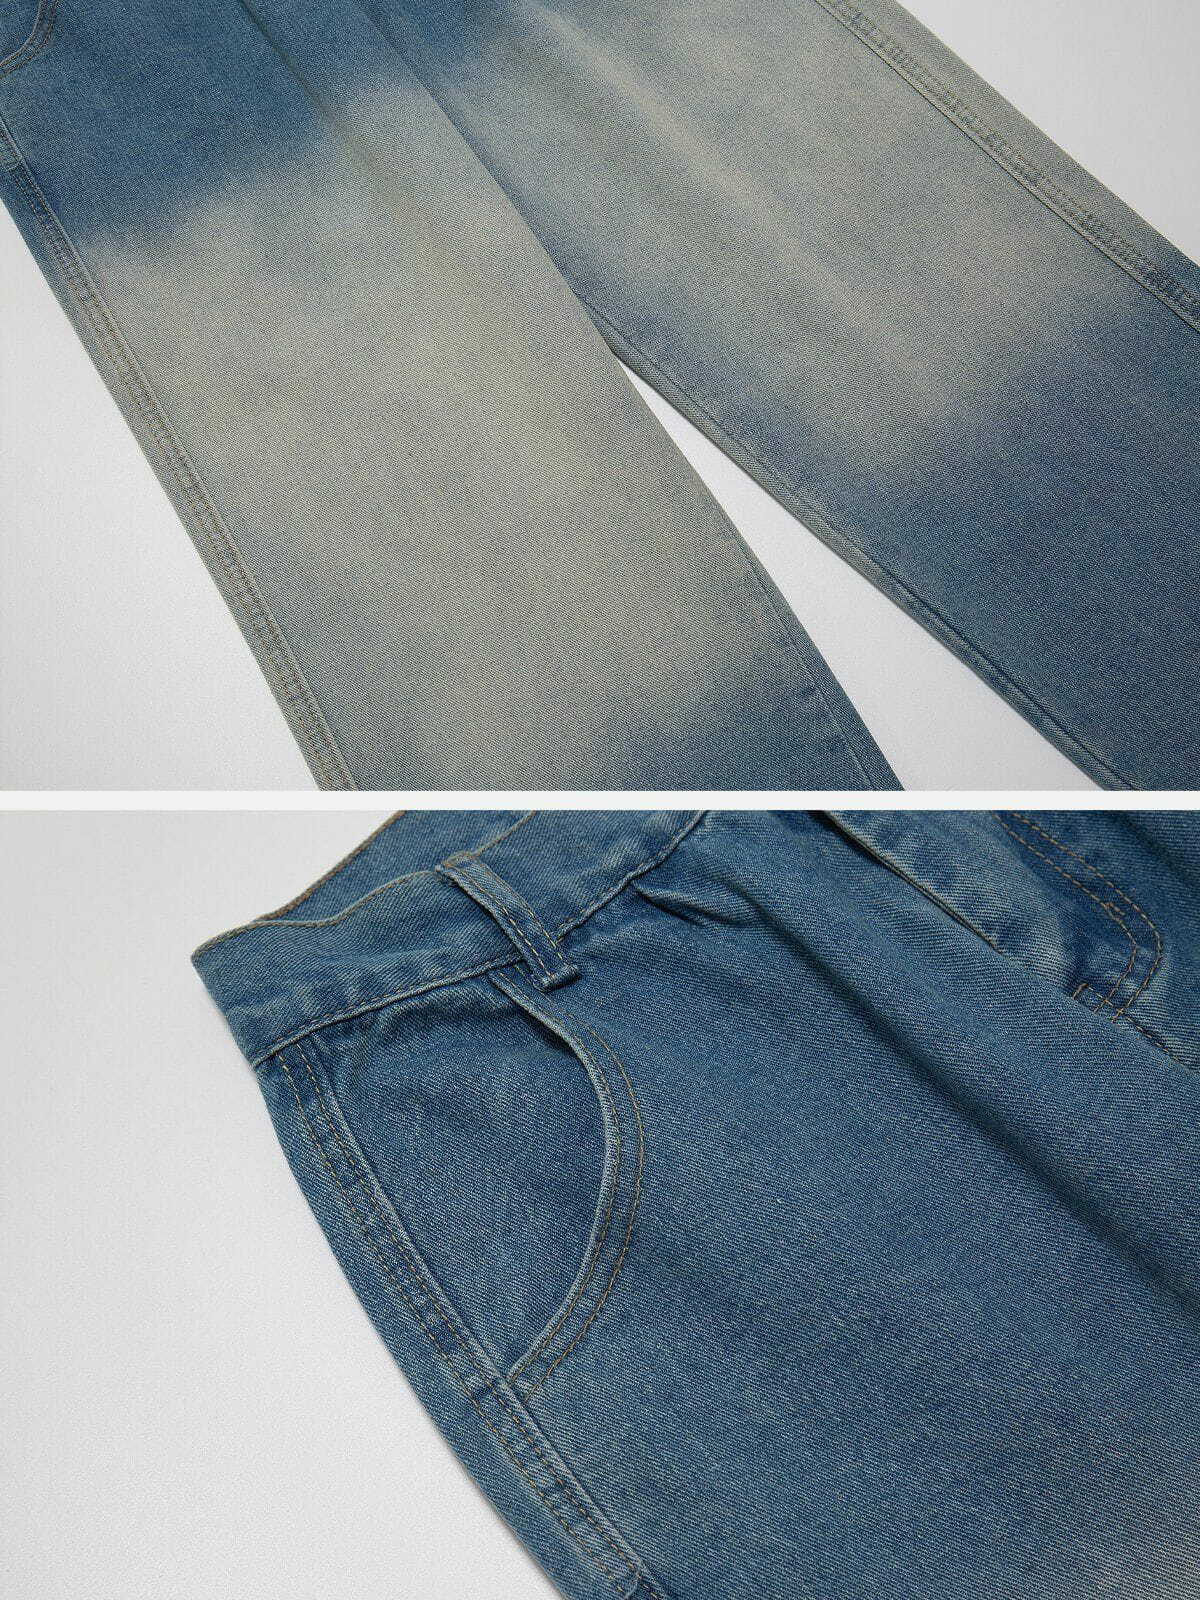 patchwork gradient jeans retro urban chic 5786